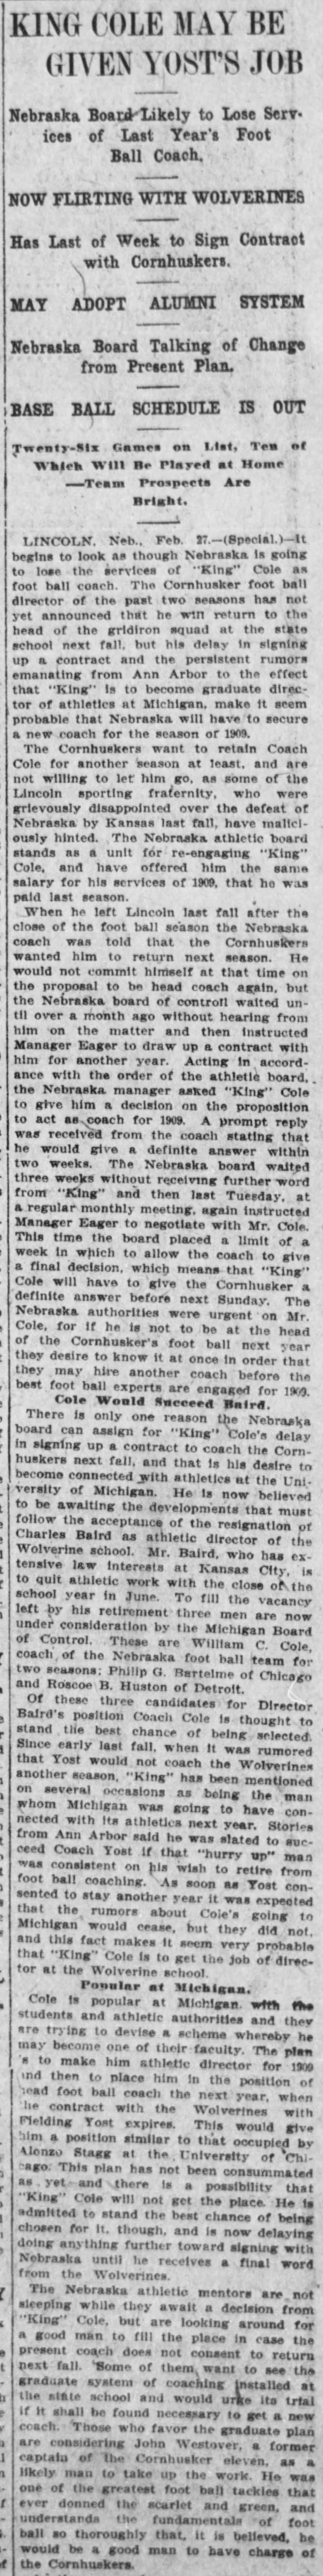 Nebraska coach King Cole flirting with Michigan